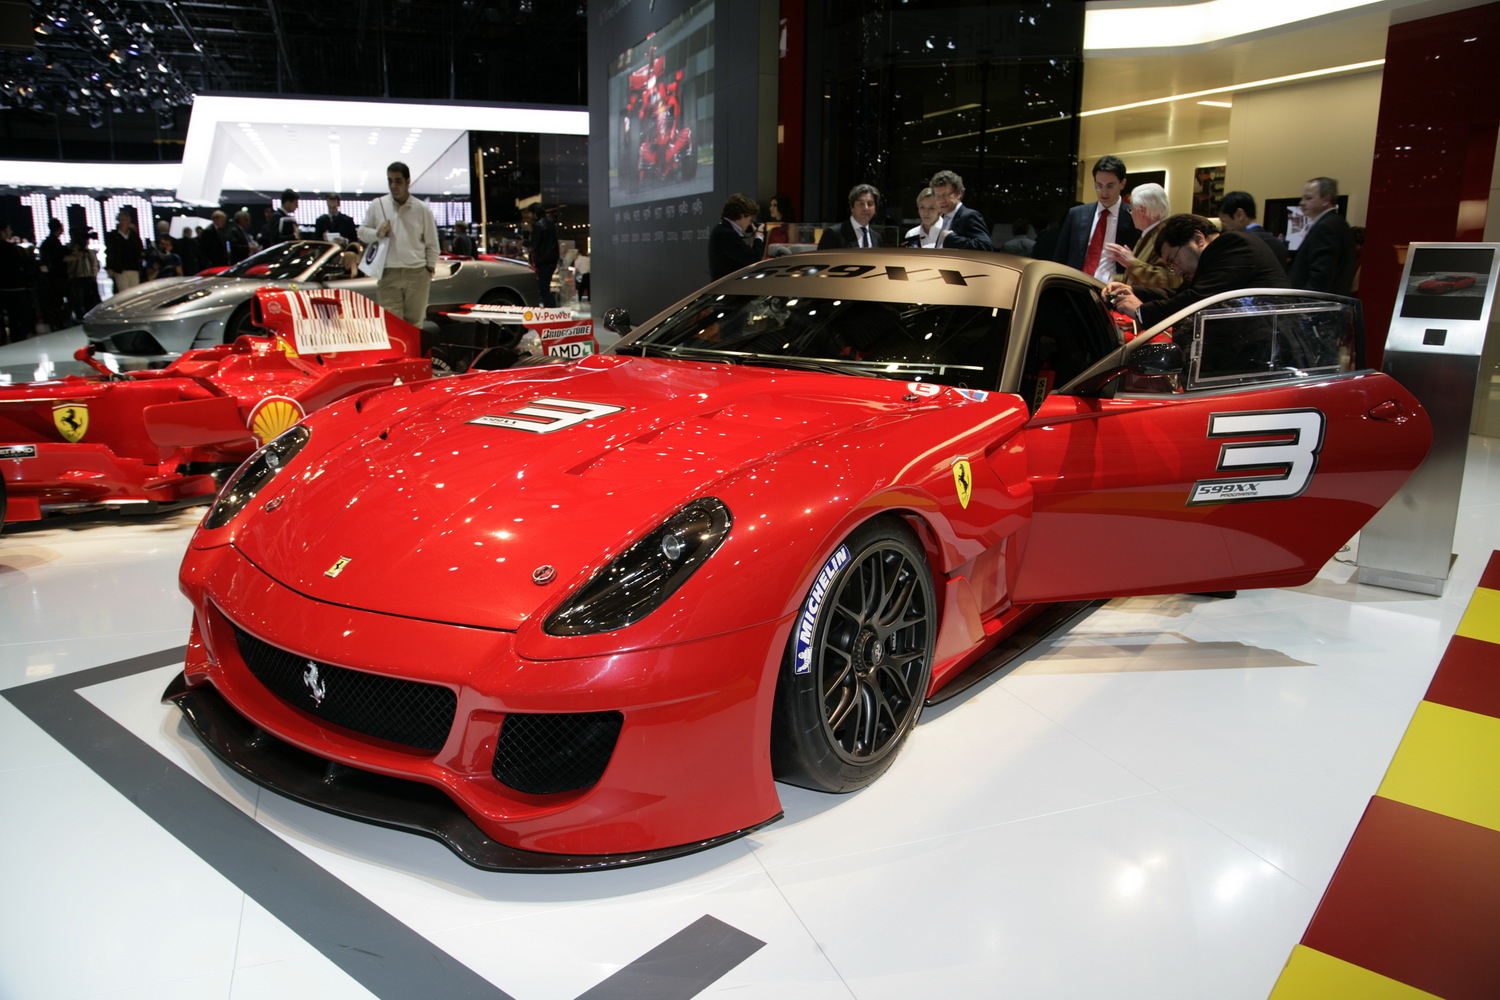 SPORT CARS 2011: Ferrari 599XX: New Track-Focused Version with 700HP V12